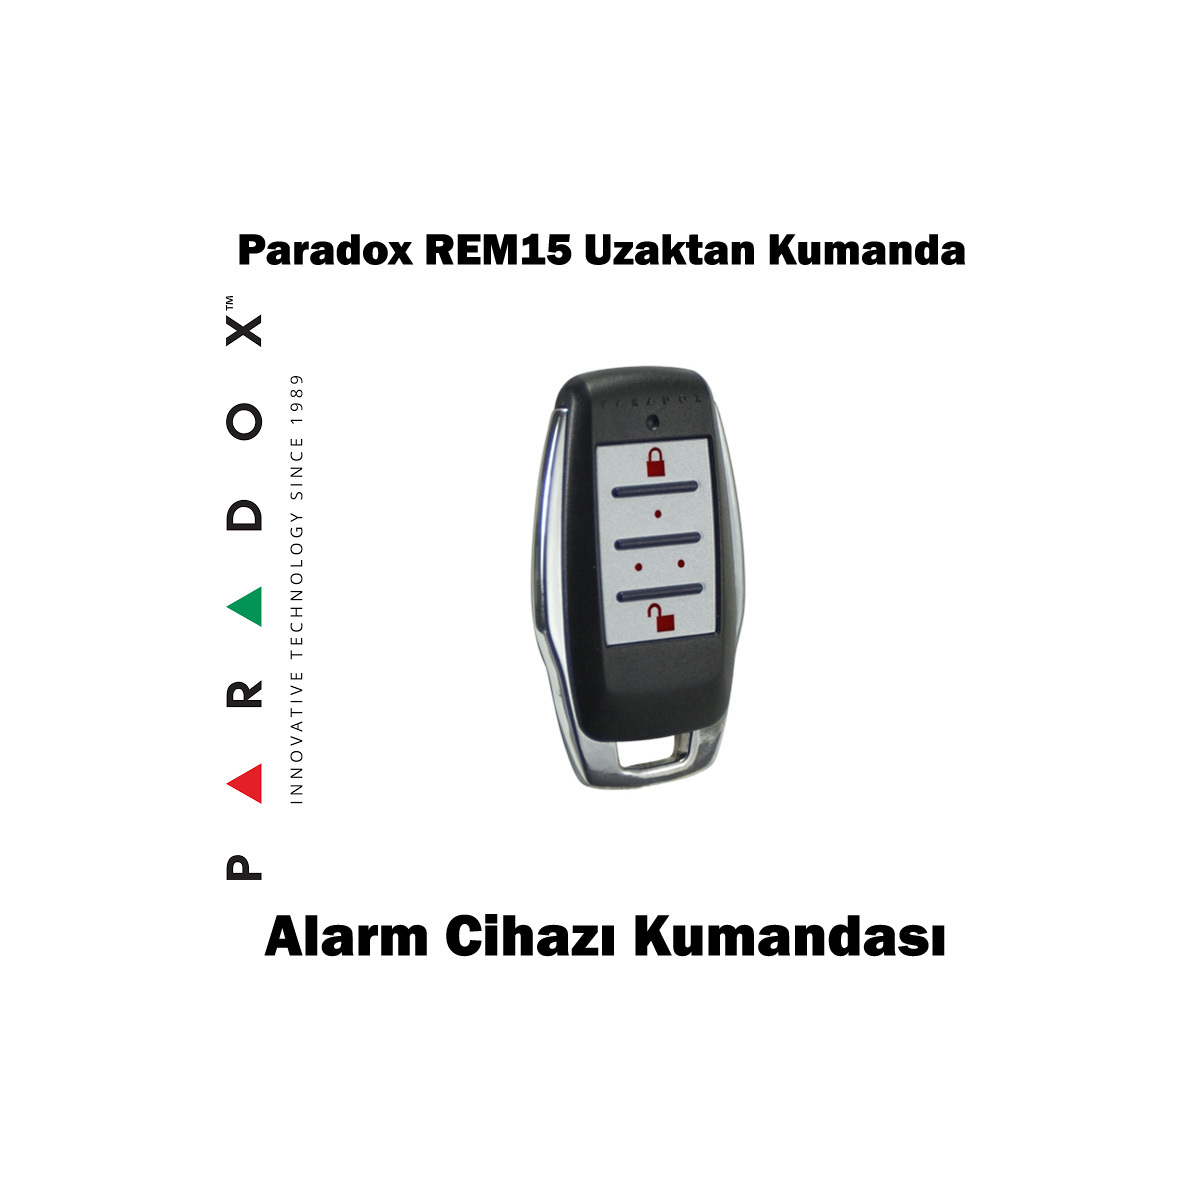 Paradox Rem15 Alarm Sistemi Uzaktan Kumandası